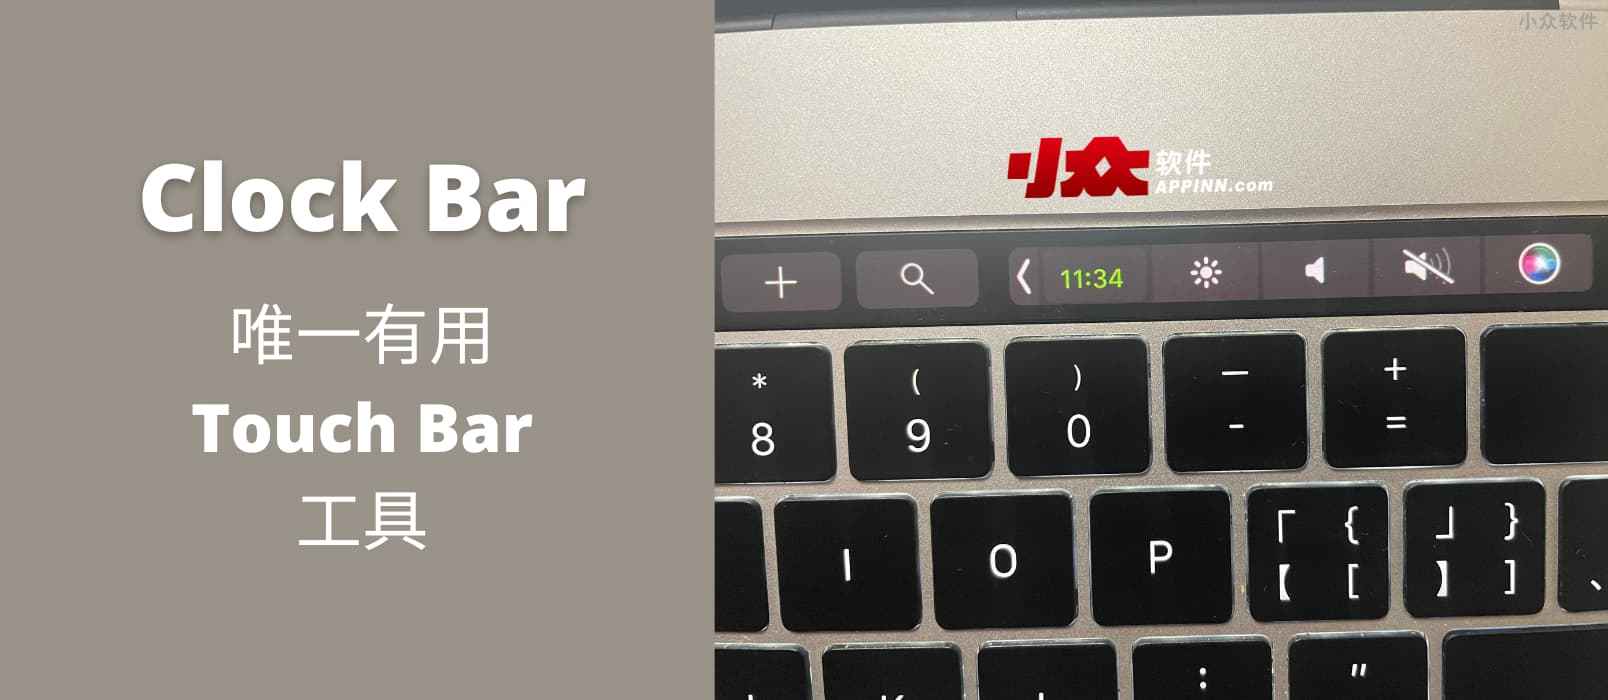 Clock Bar - 在 Touch Bar 显示当前时间，唯一有用 Touch Bar 工具